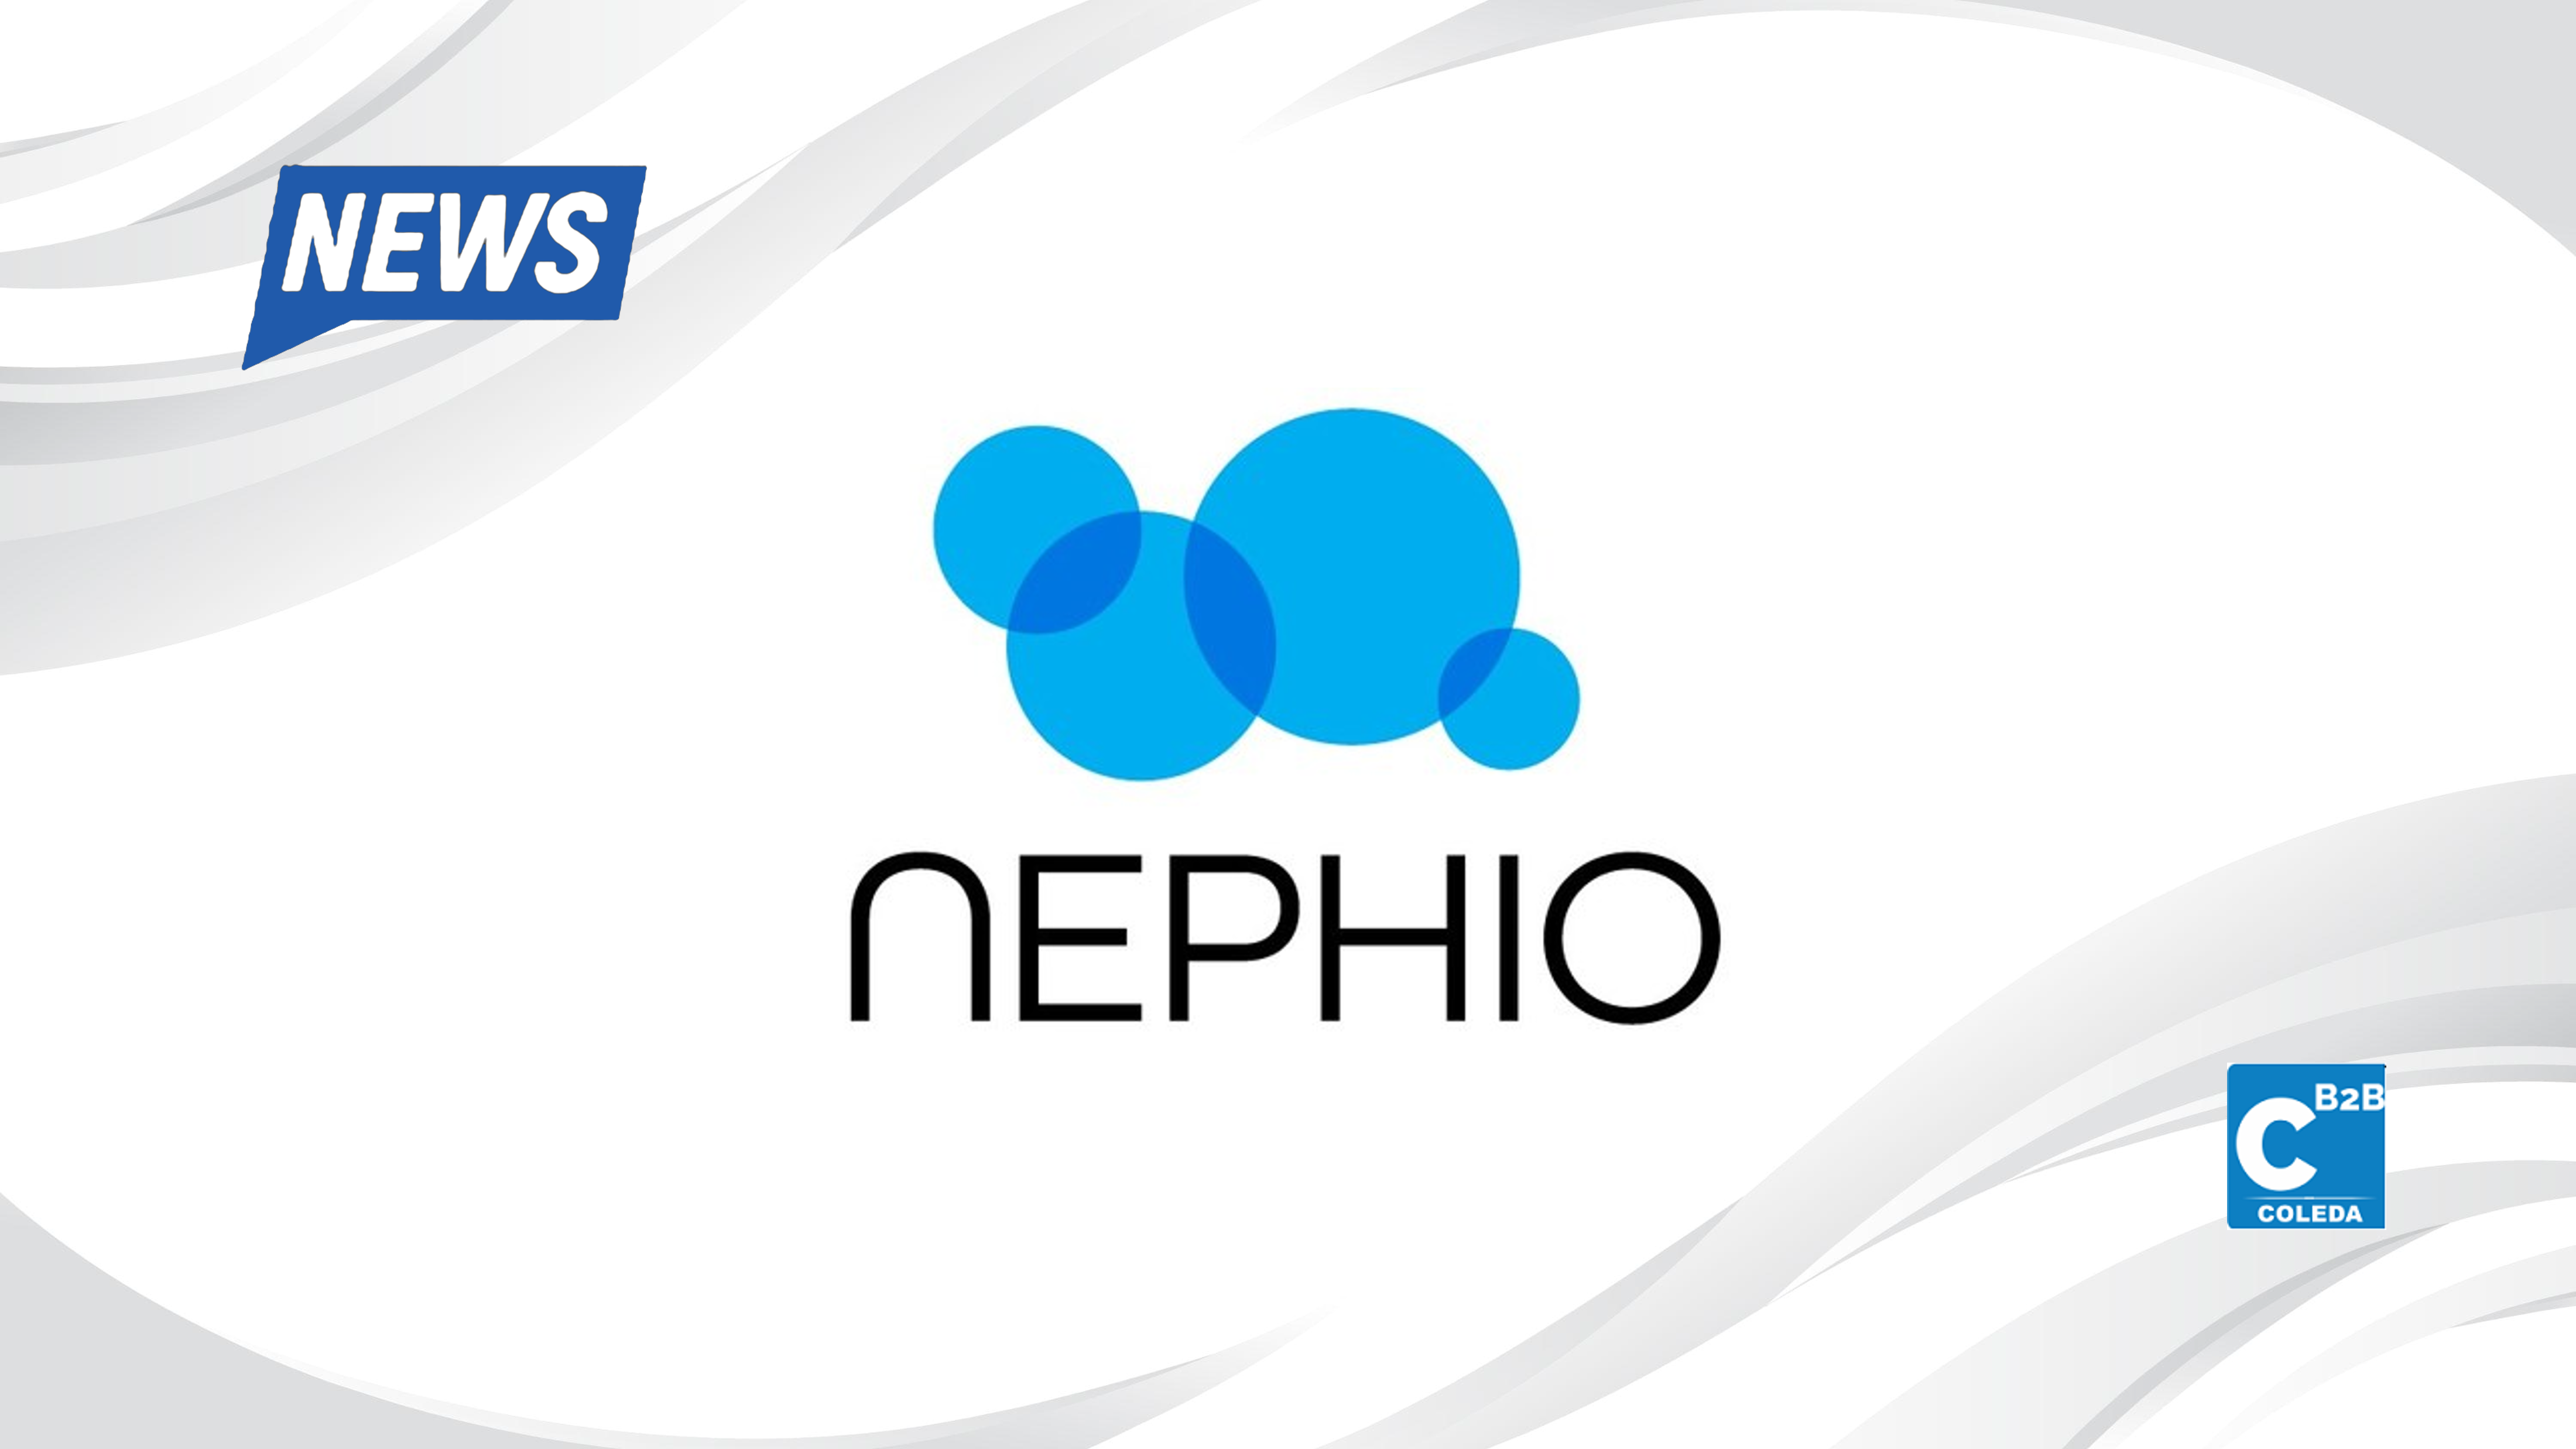 Nephio sees rapid growth